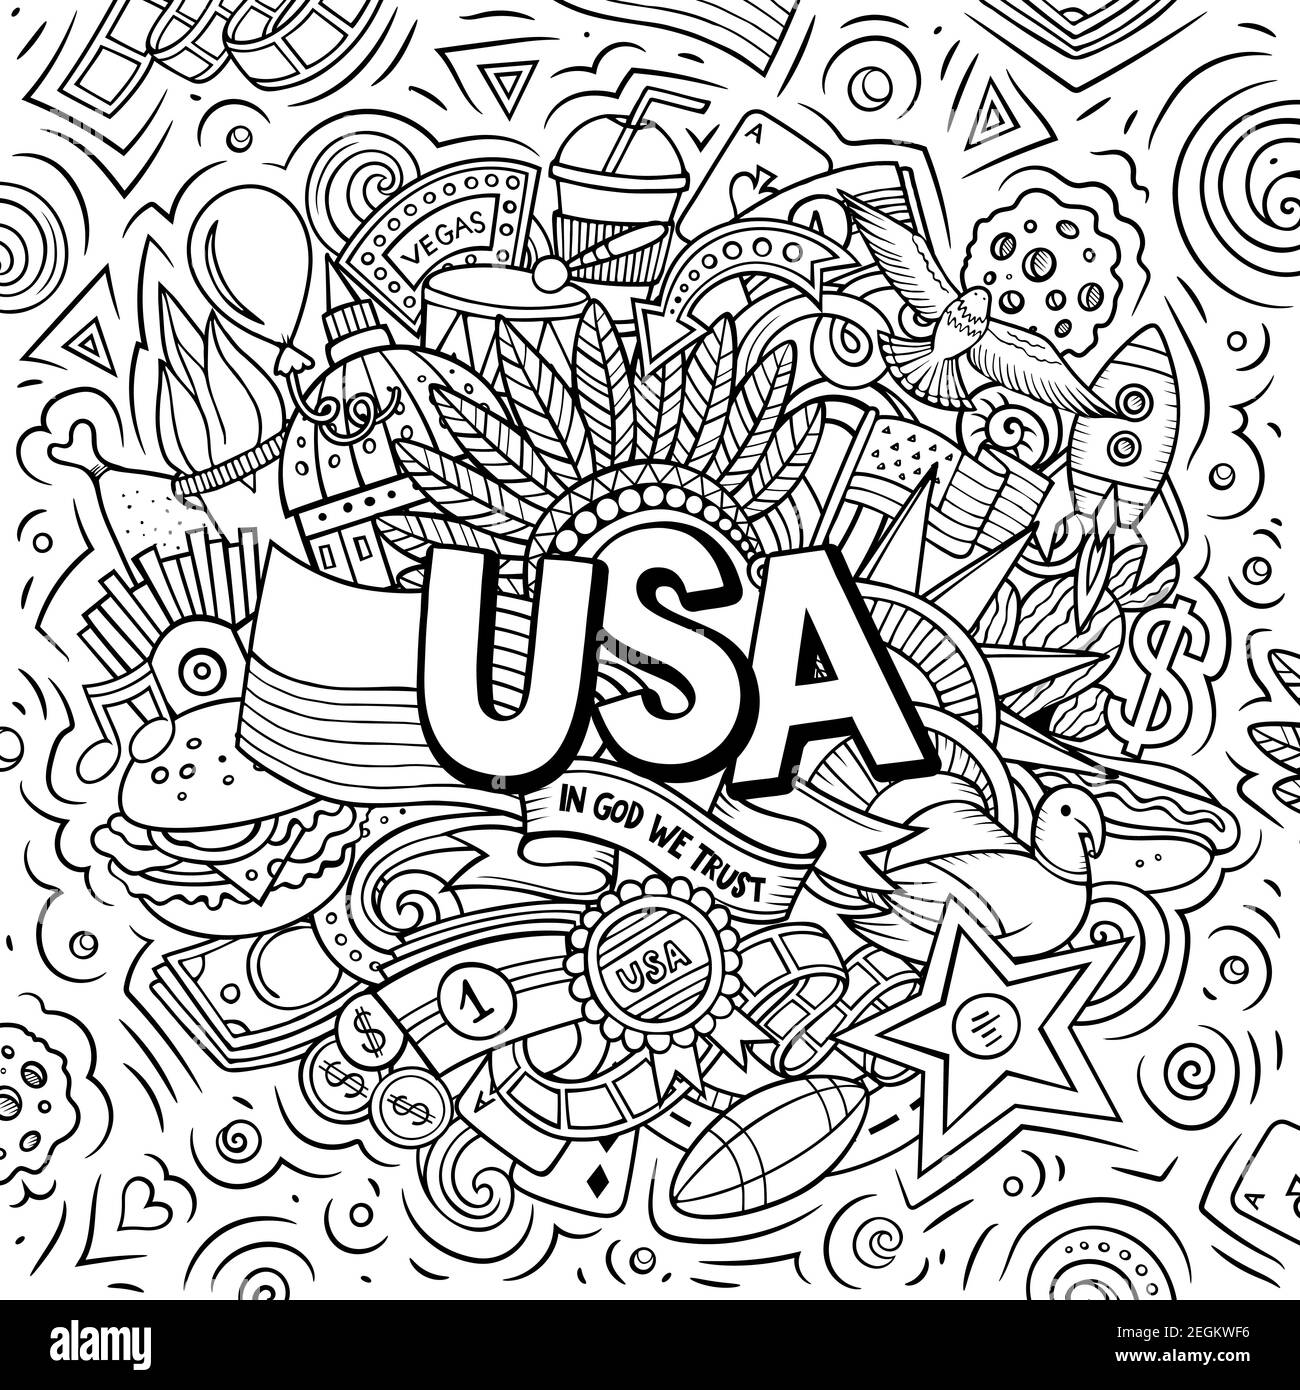 USA hand drawn cartoon doodle illustration. Stock Vector